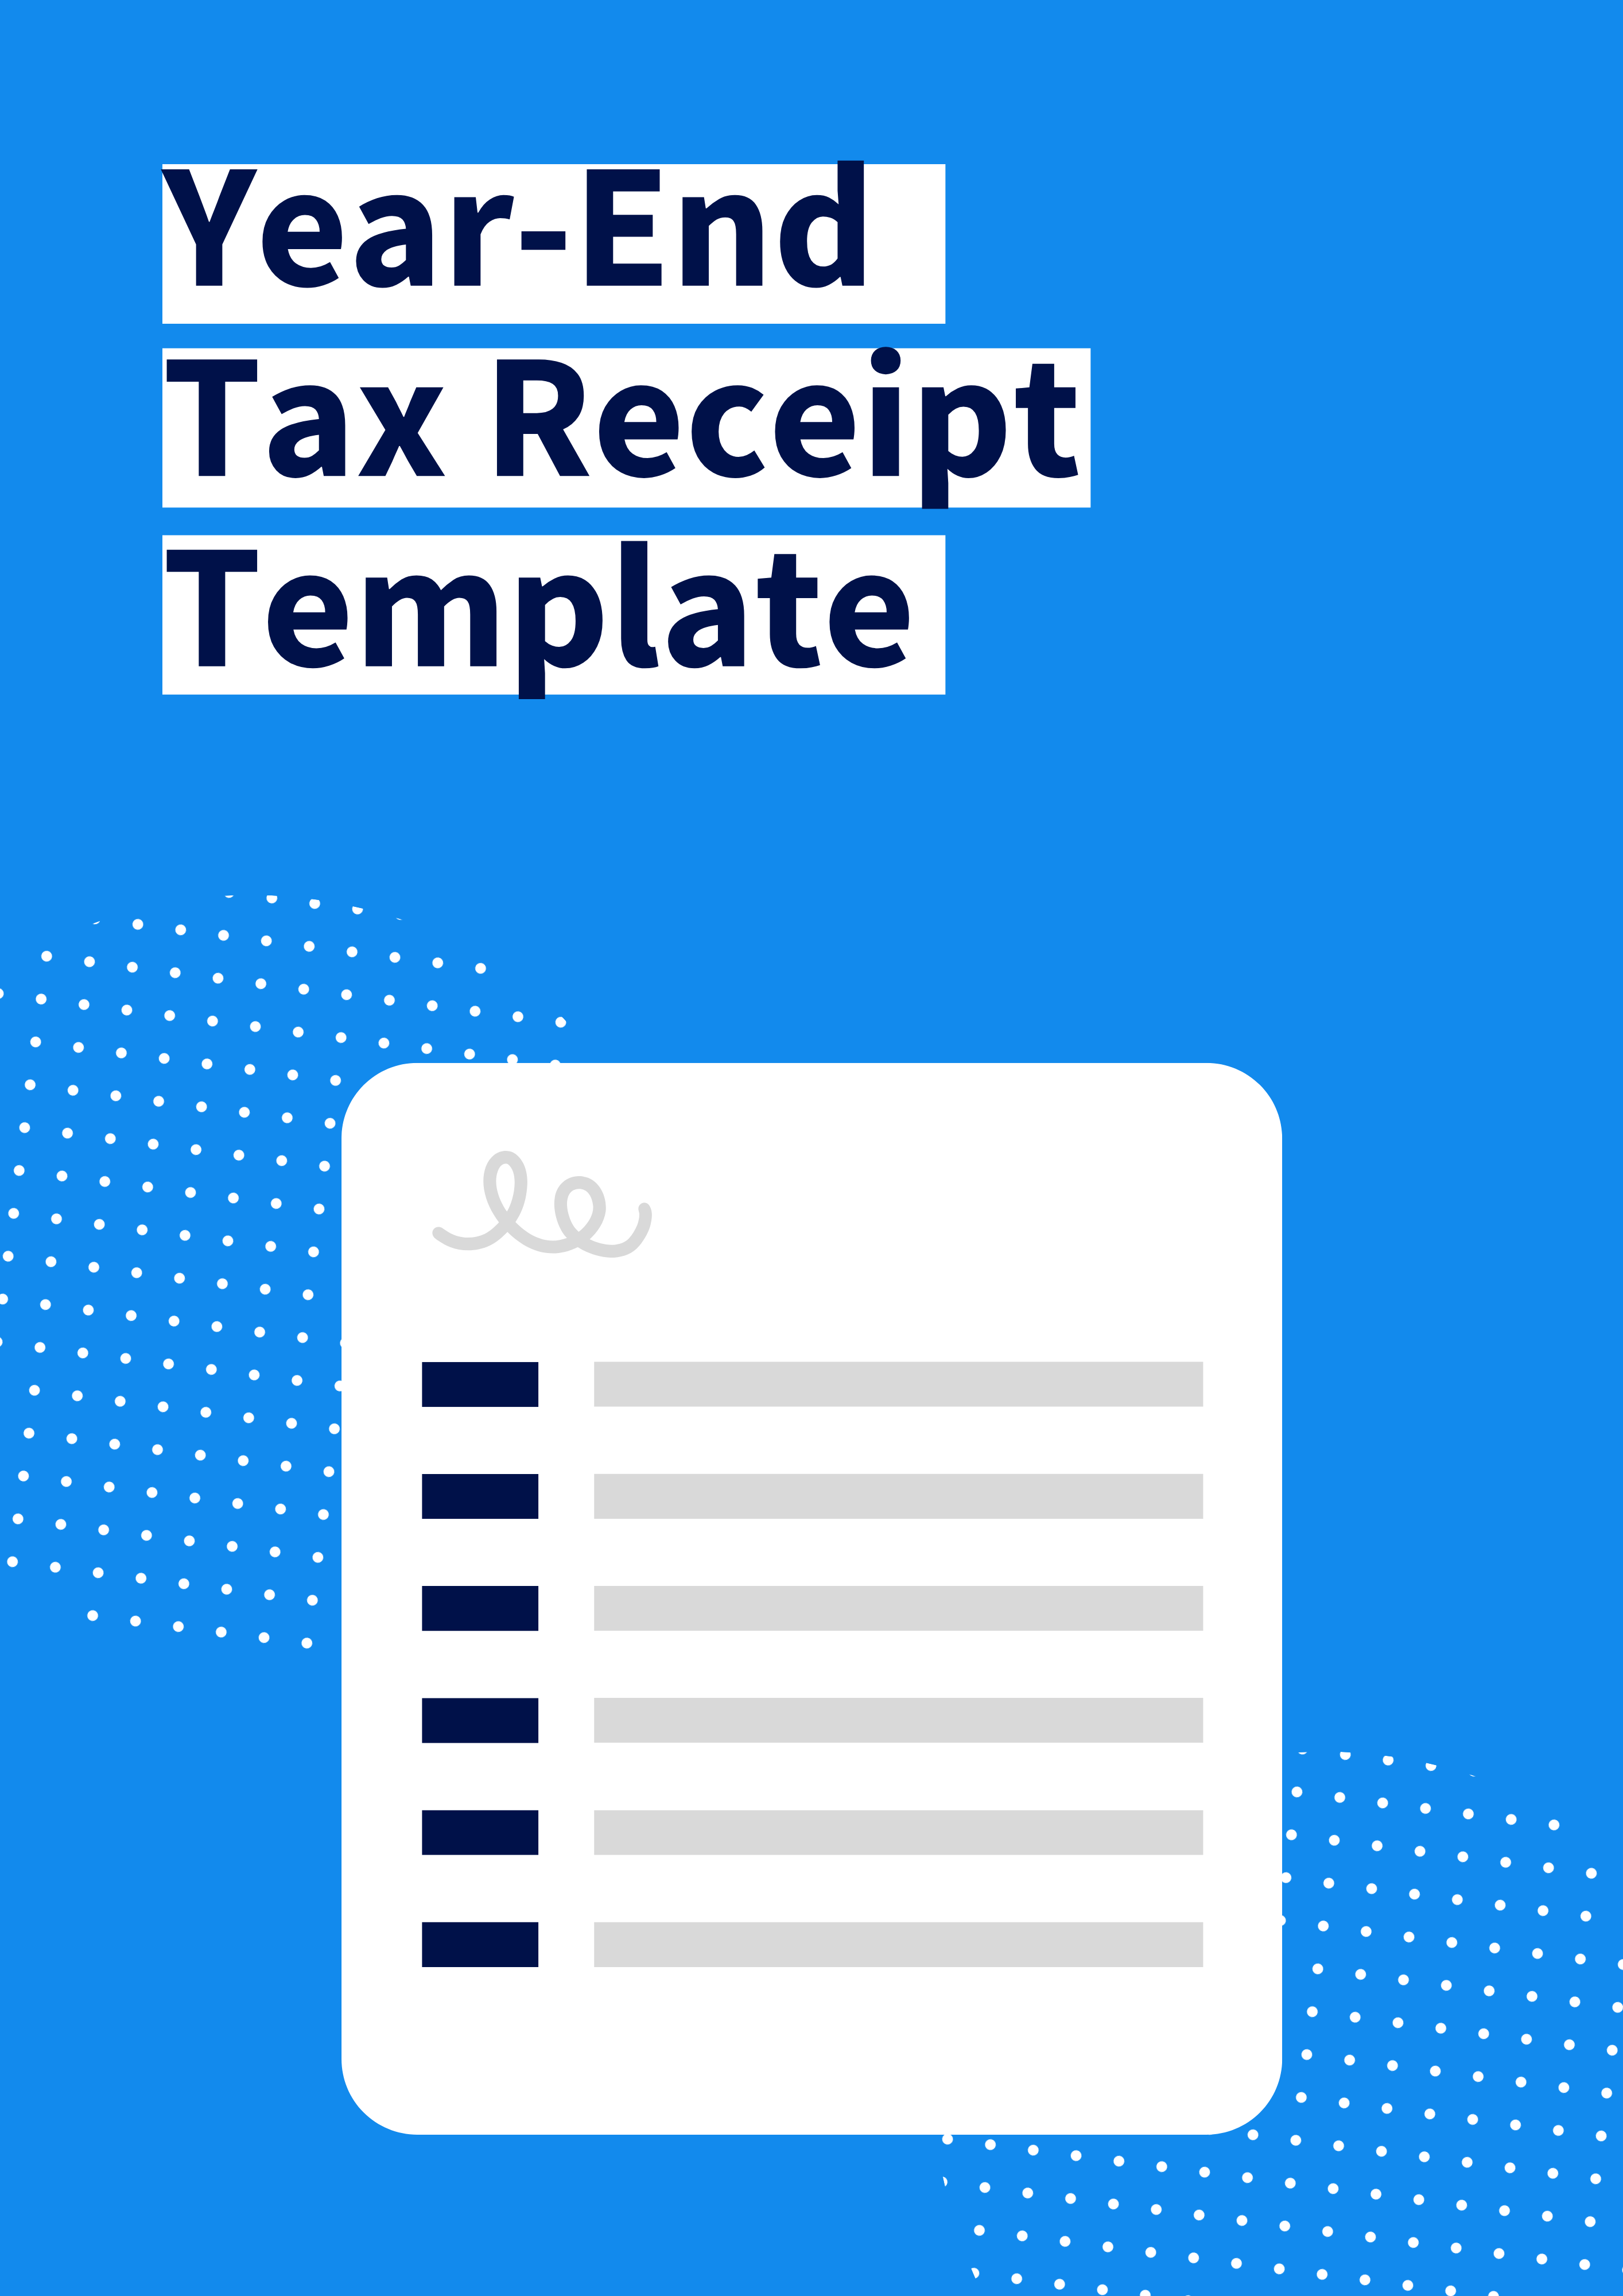 Year-End Tax Receipt Template